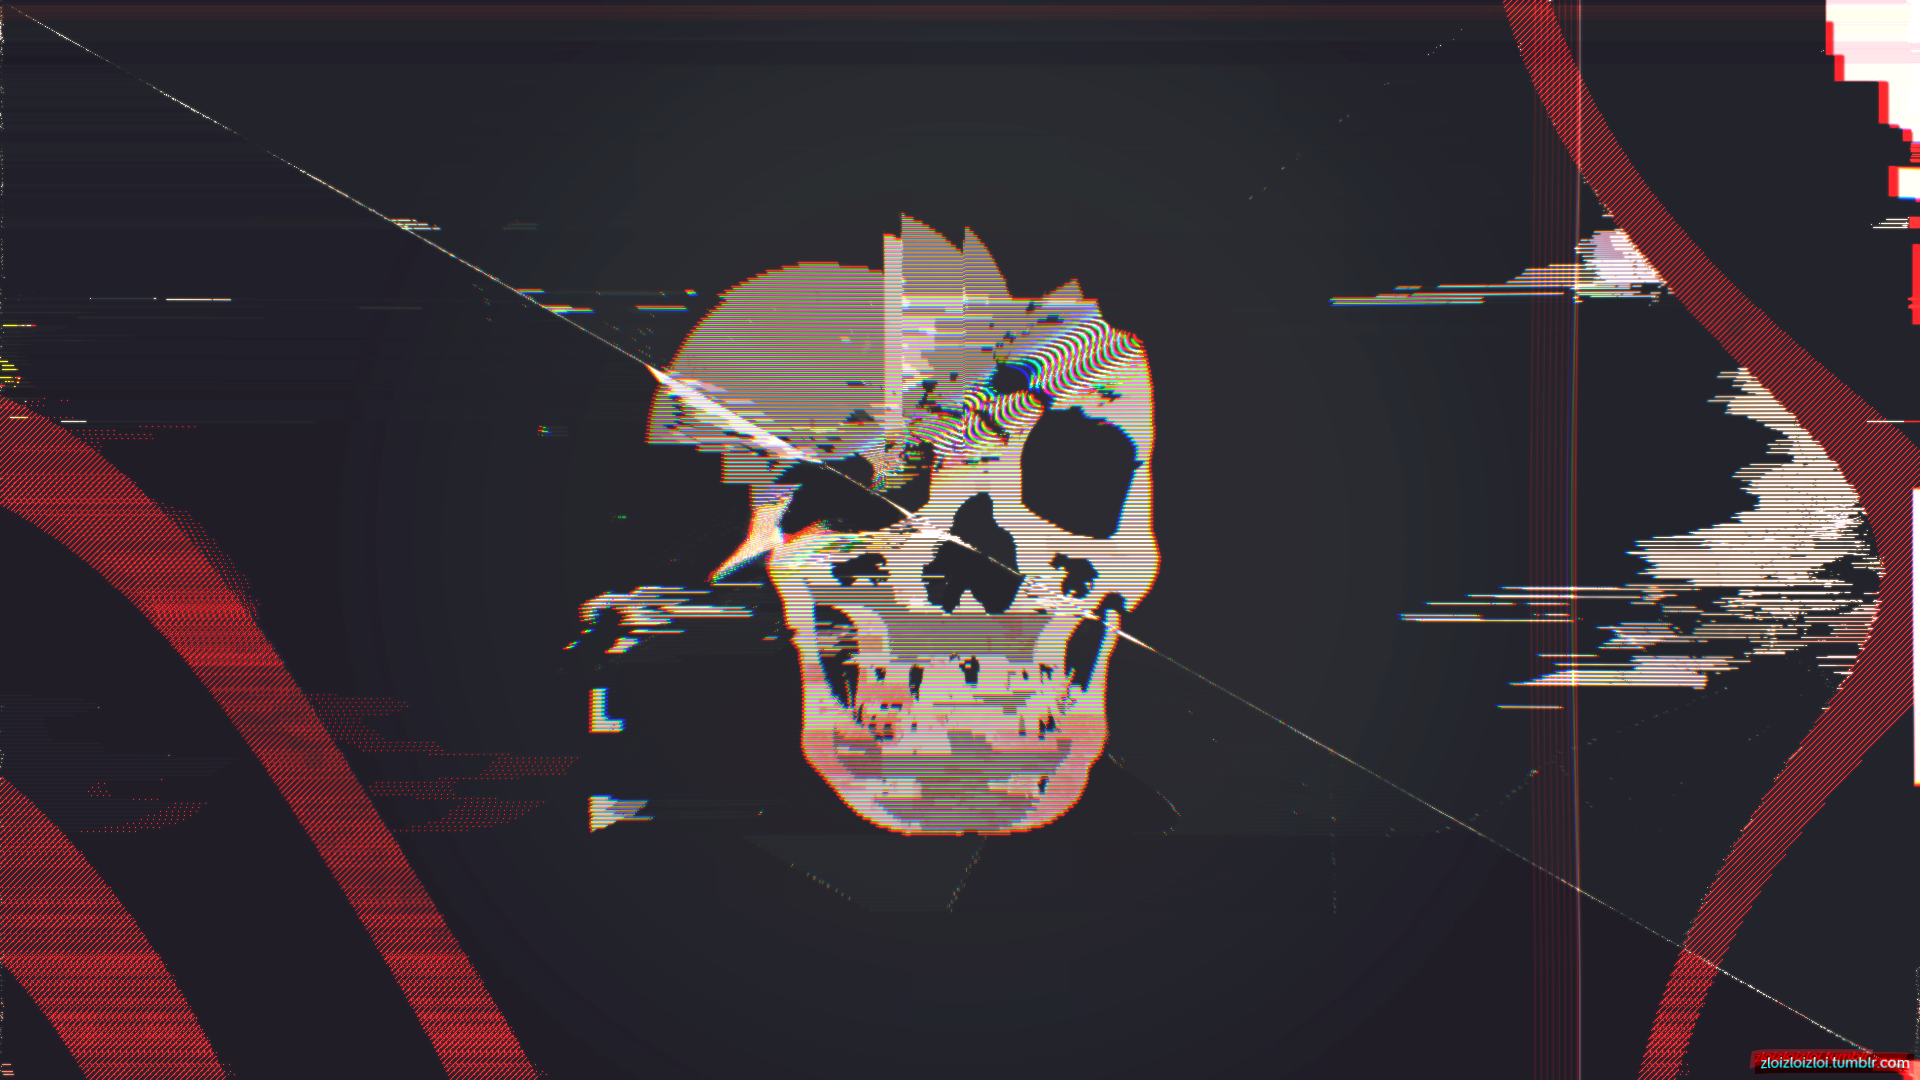 General 1920x1080 glitch art skull abstract cyberpunk webpunk watermarked